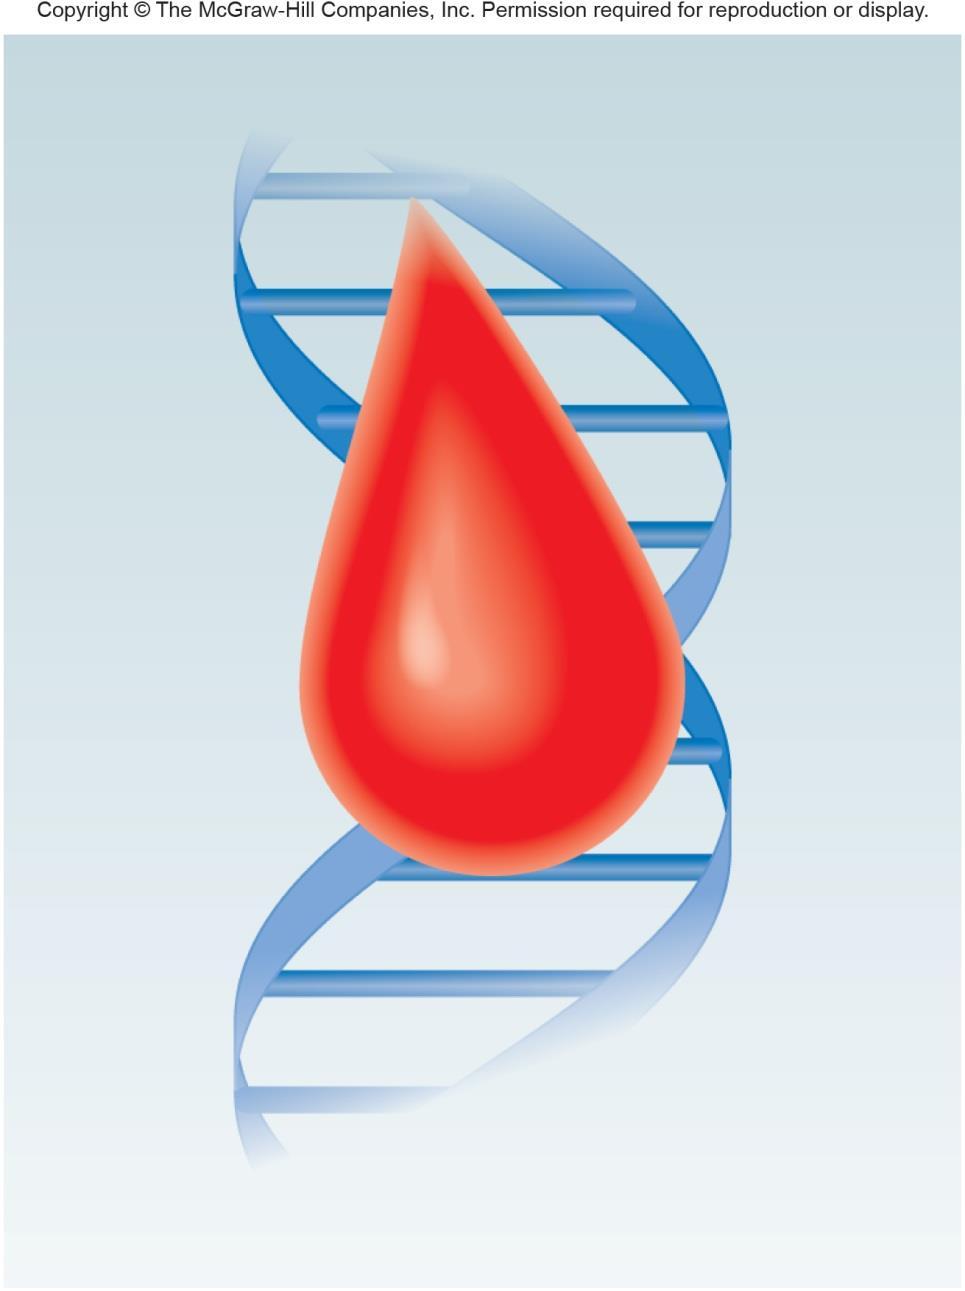 Bloodgen is a consortium of European blood banks and universities investigating